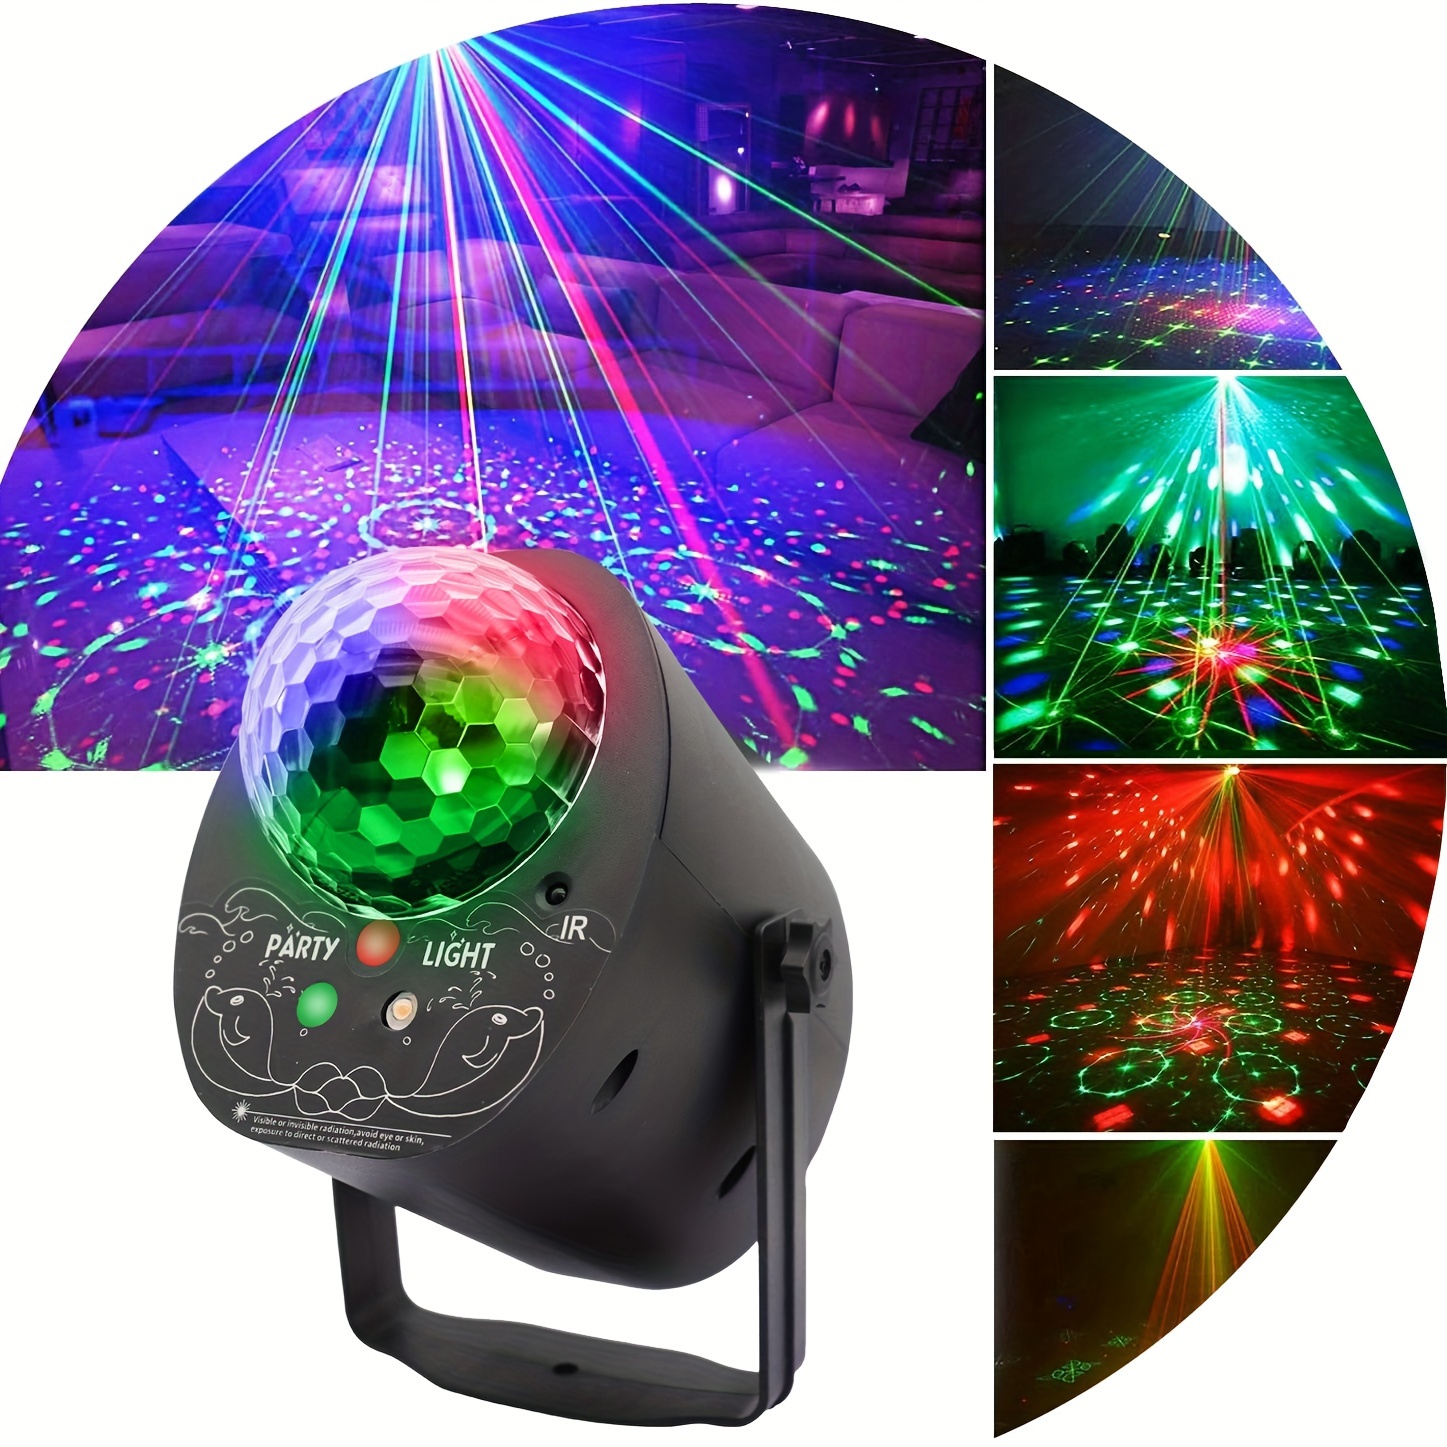 Disco Ball Disco Light Party Disco Light Projecteur Led Party Lamp